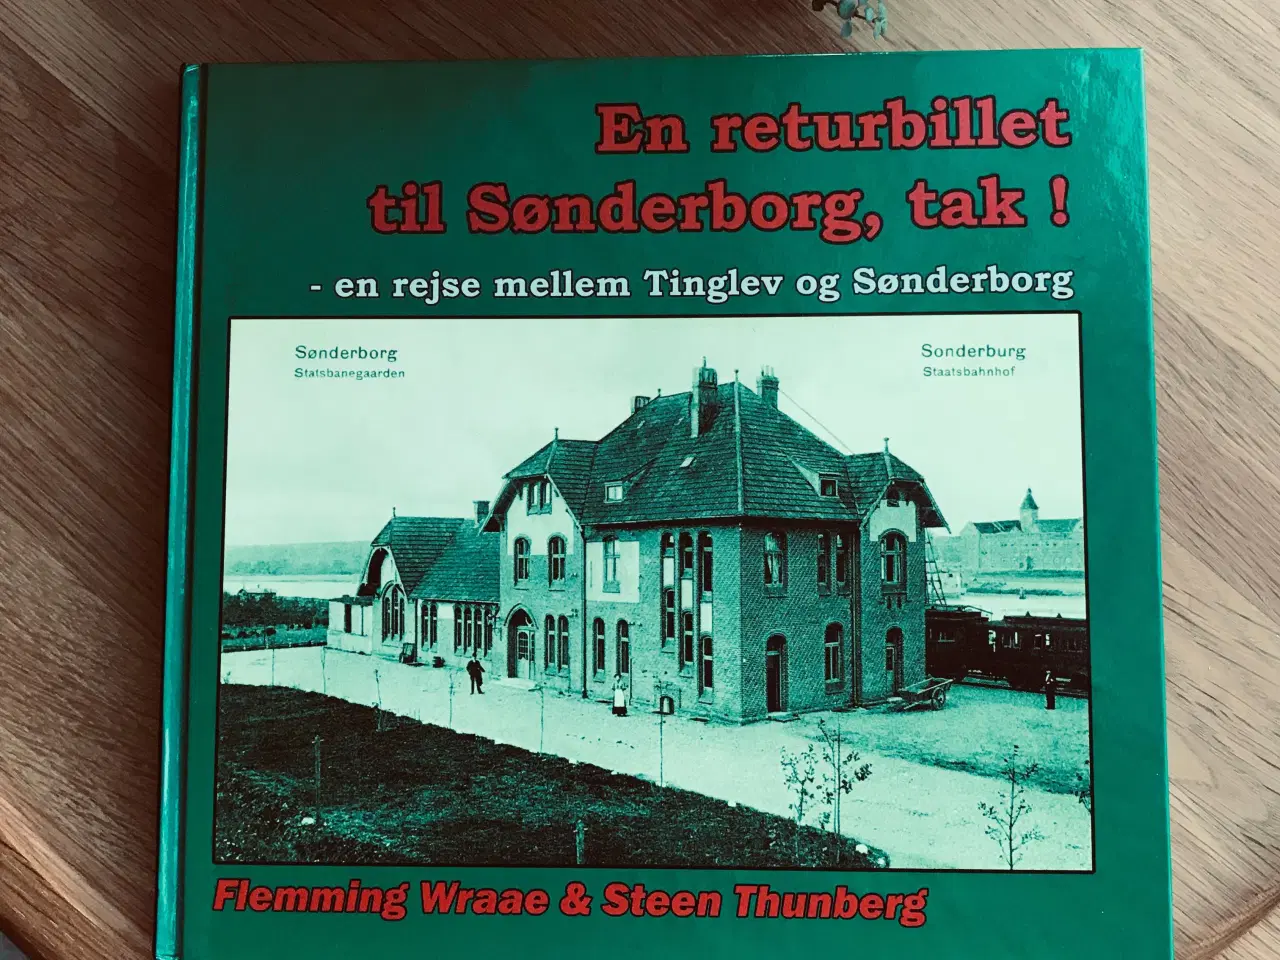 Billede 1 - En returbillet til Sønderborg, tak!